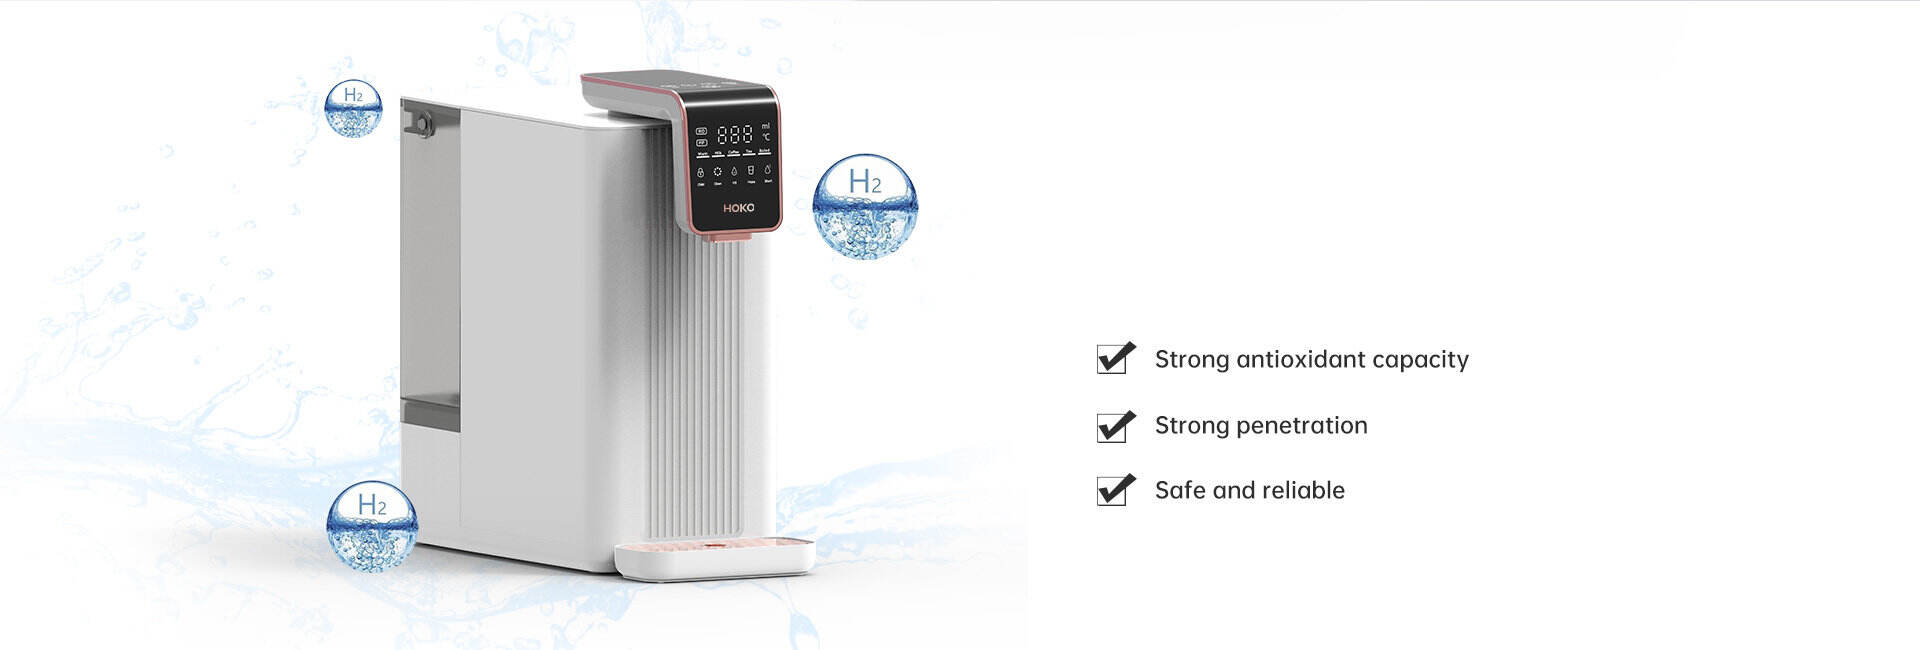 SJ-100R-A01 Smart Domestic RO Water Purifier Manufacturer details